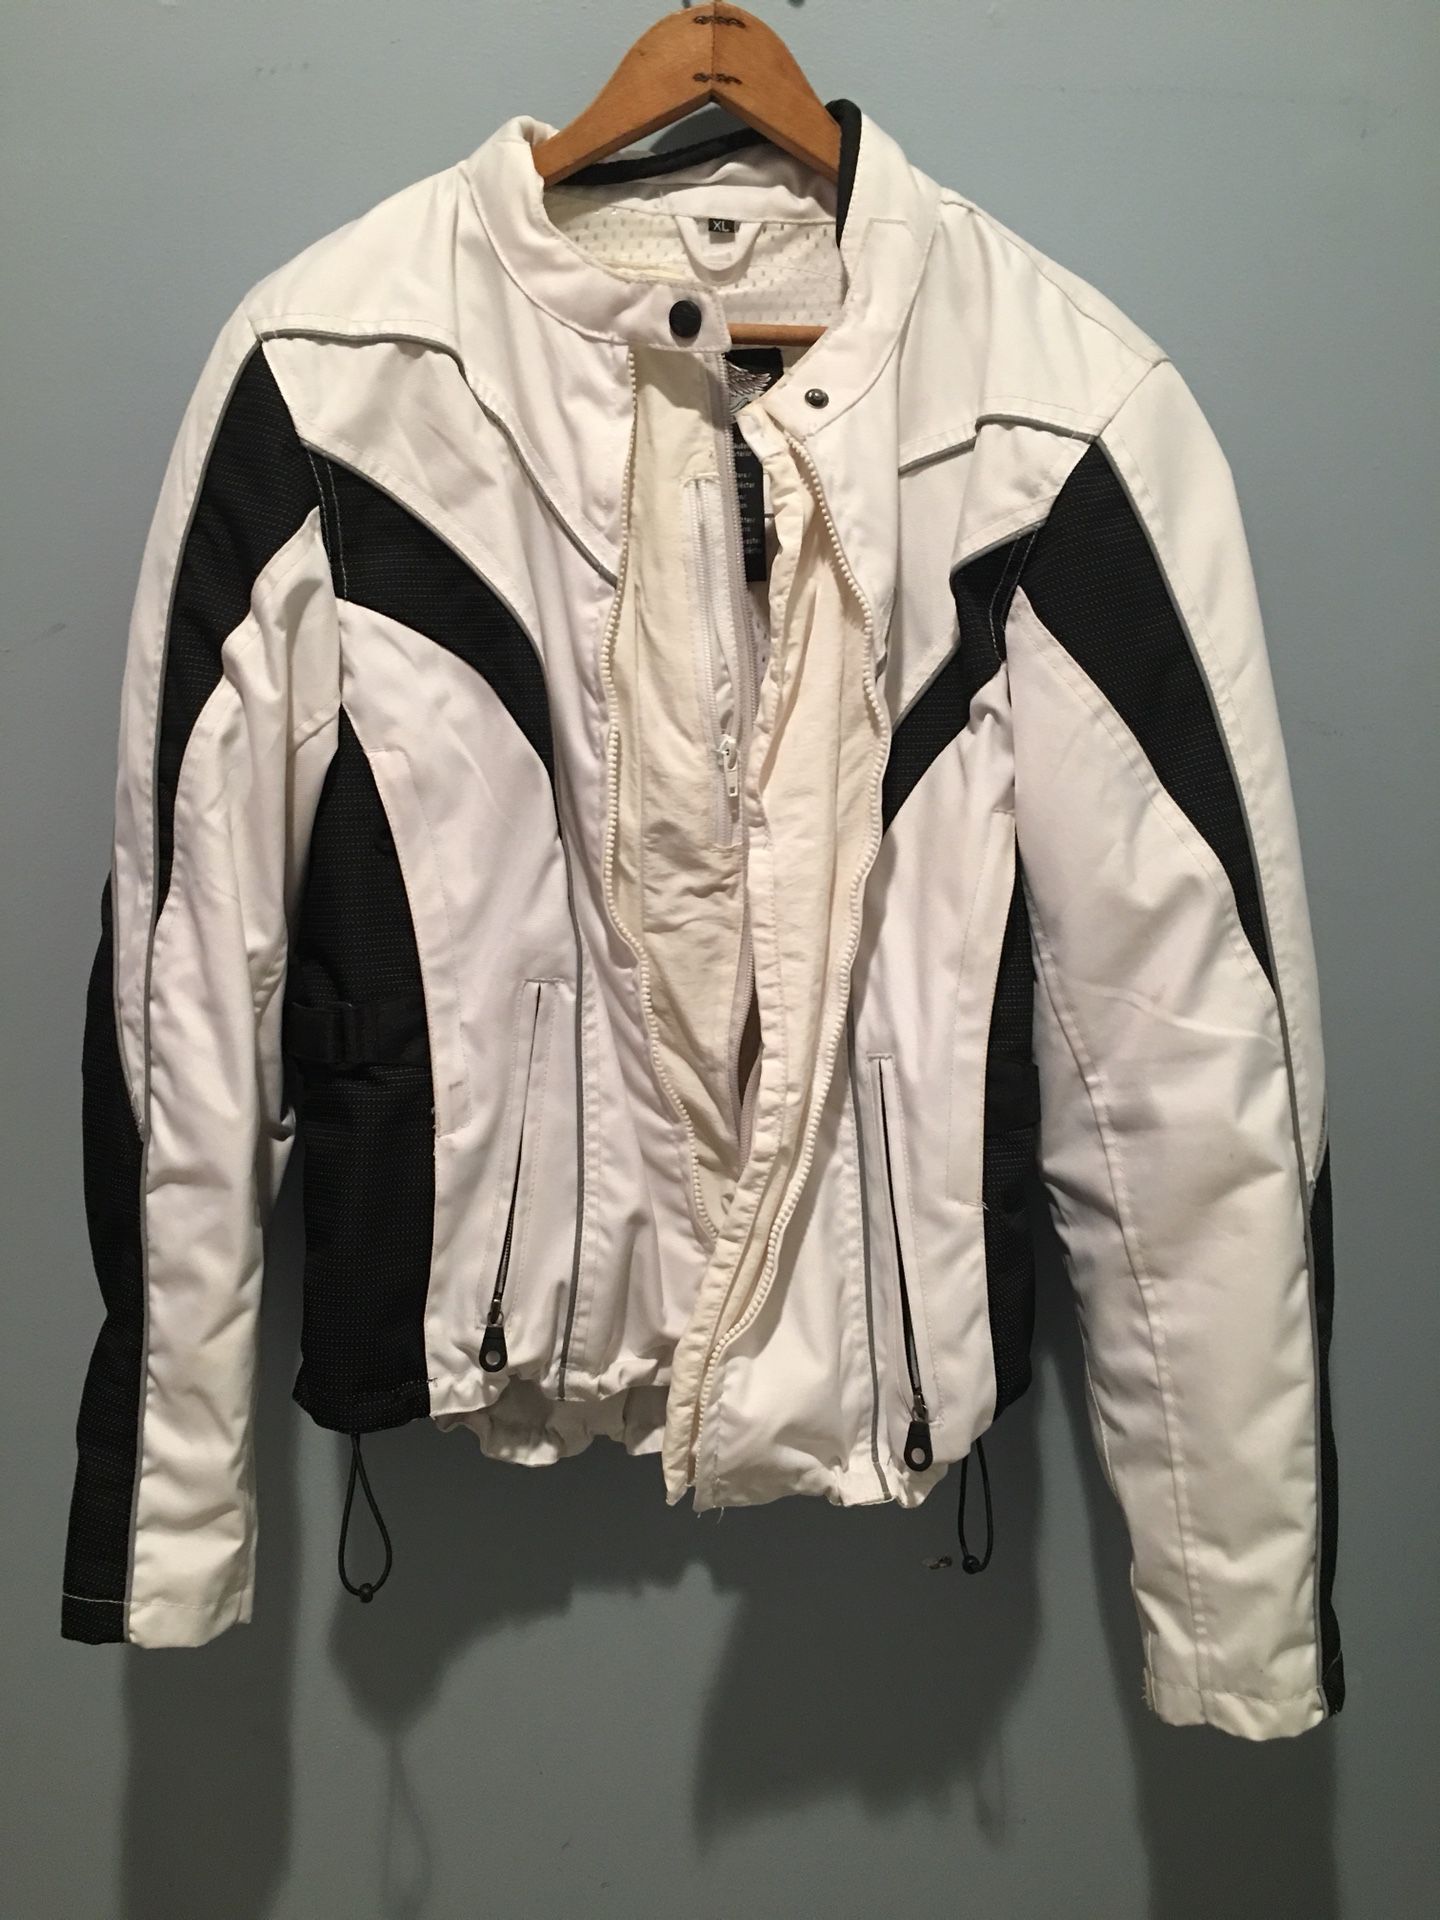 Harley Davidson motorcycle jacket size XL